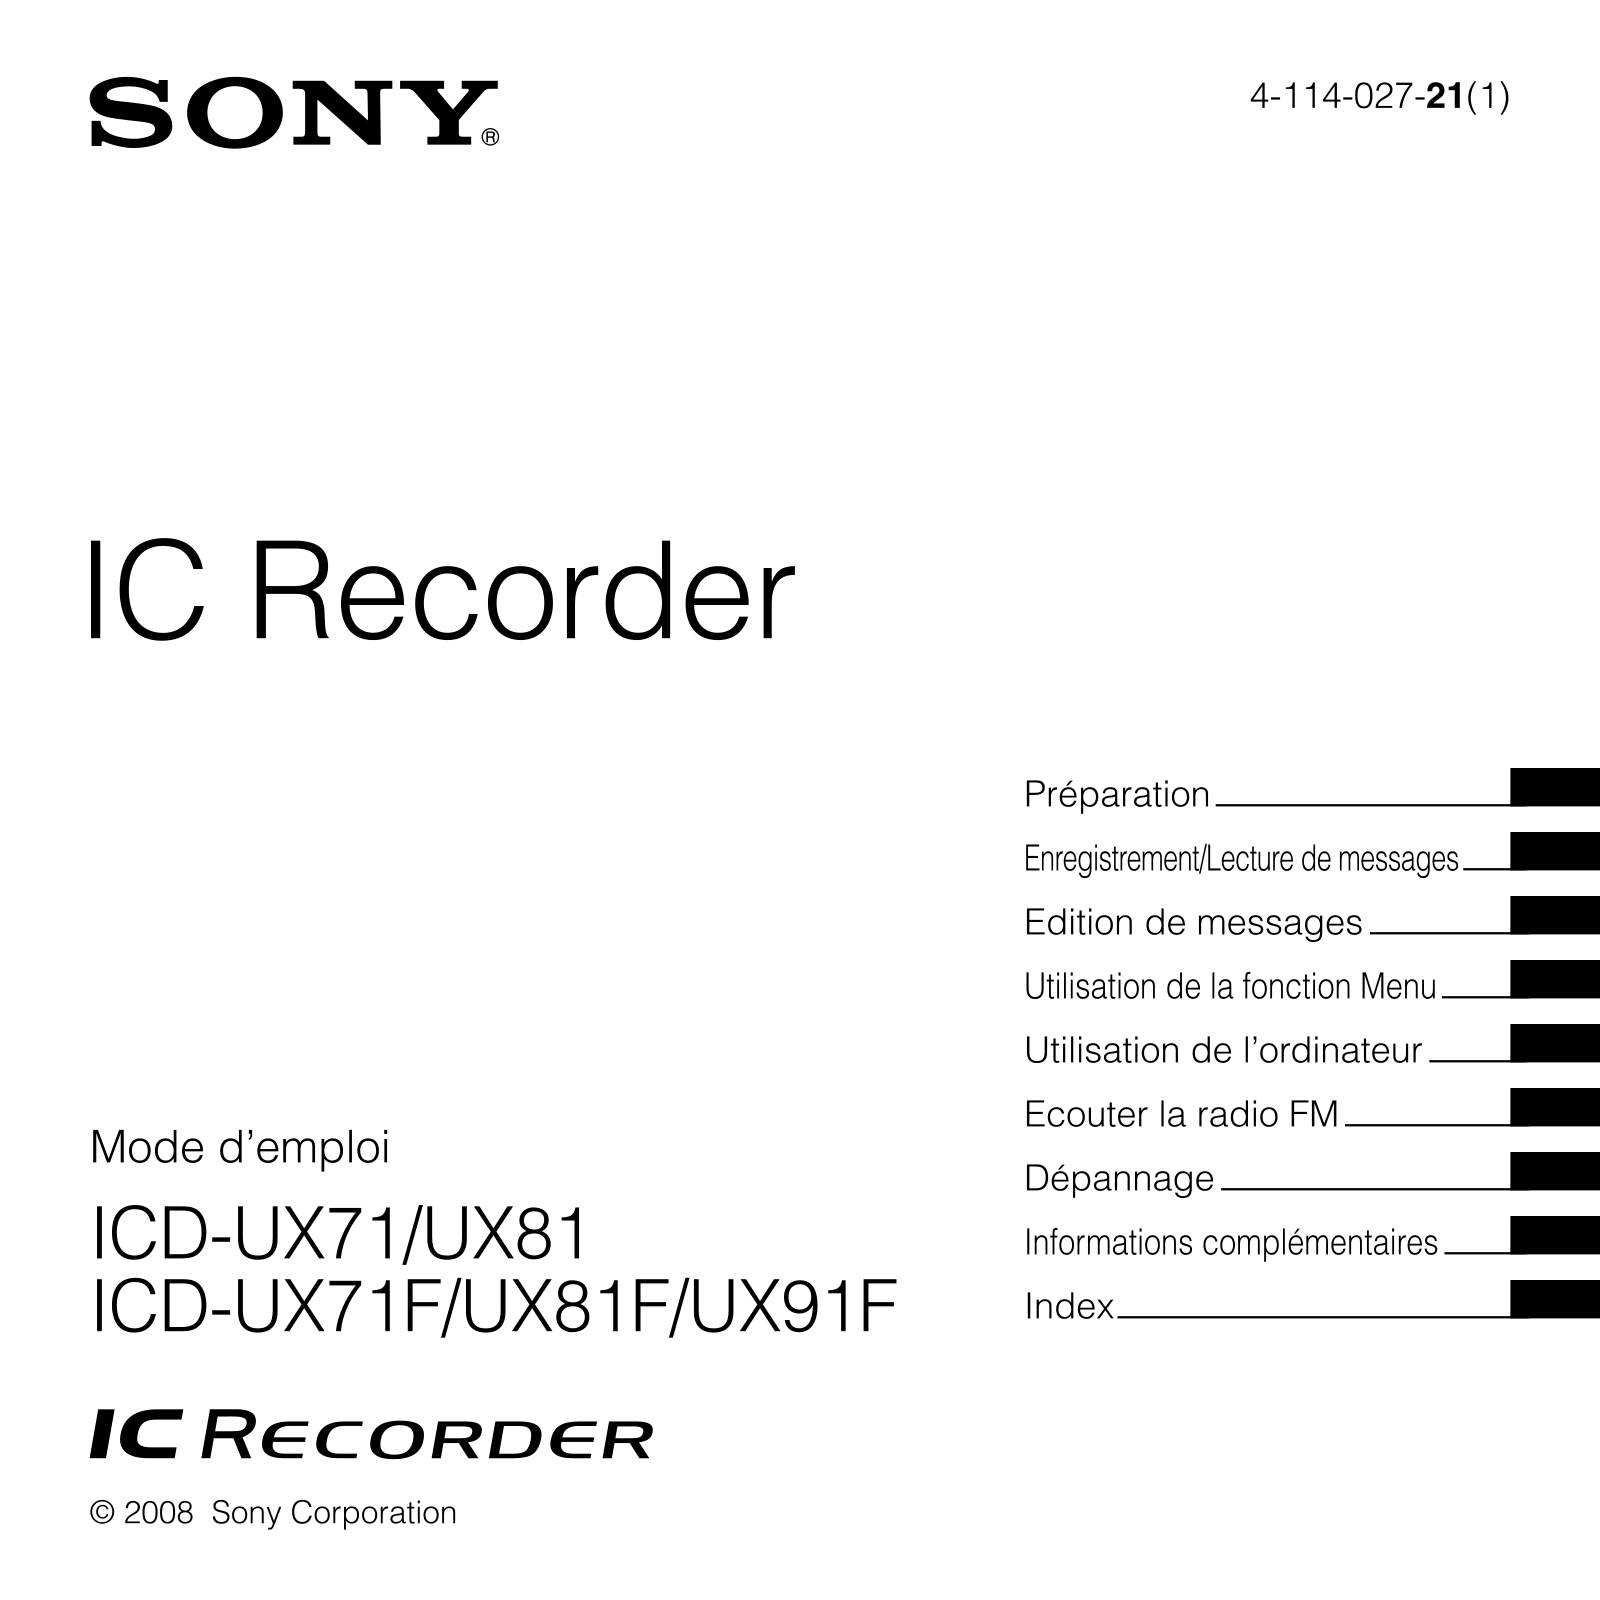 SONY ICD-UX91 User Manual